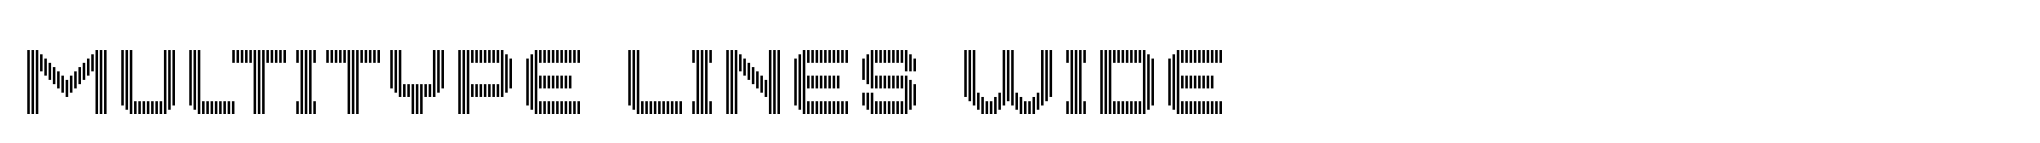 MultiType Lines Wide image